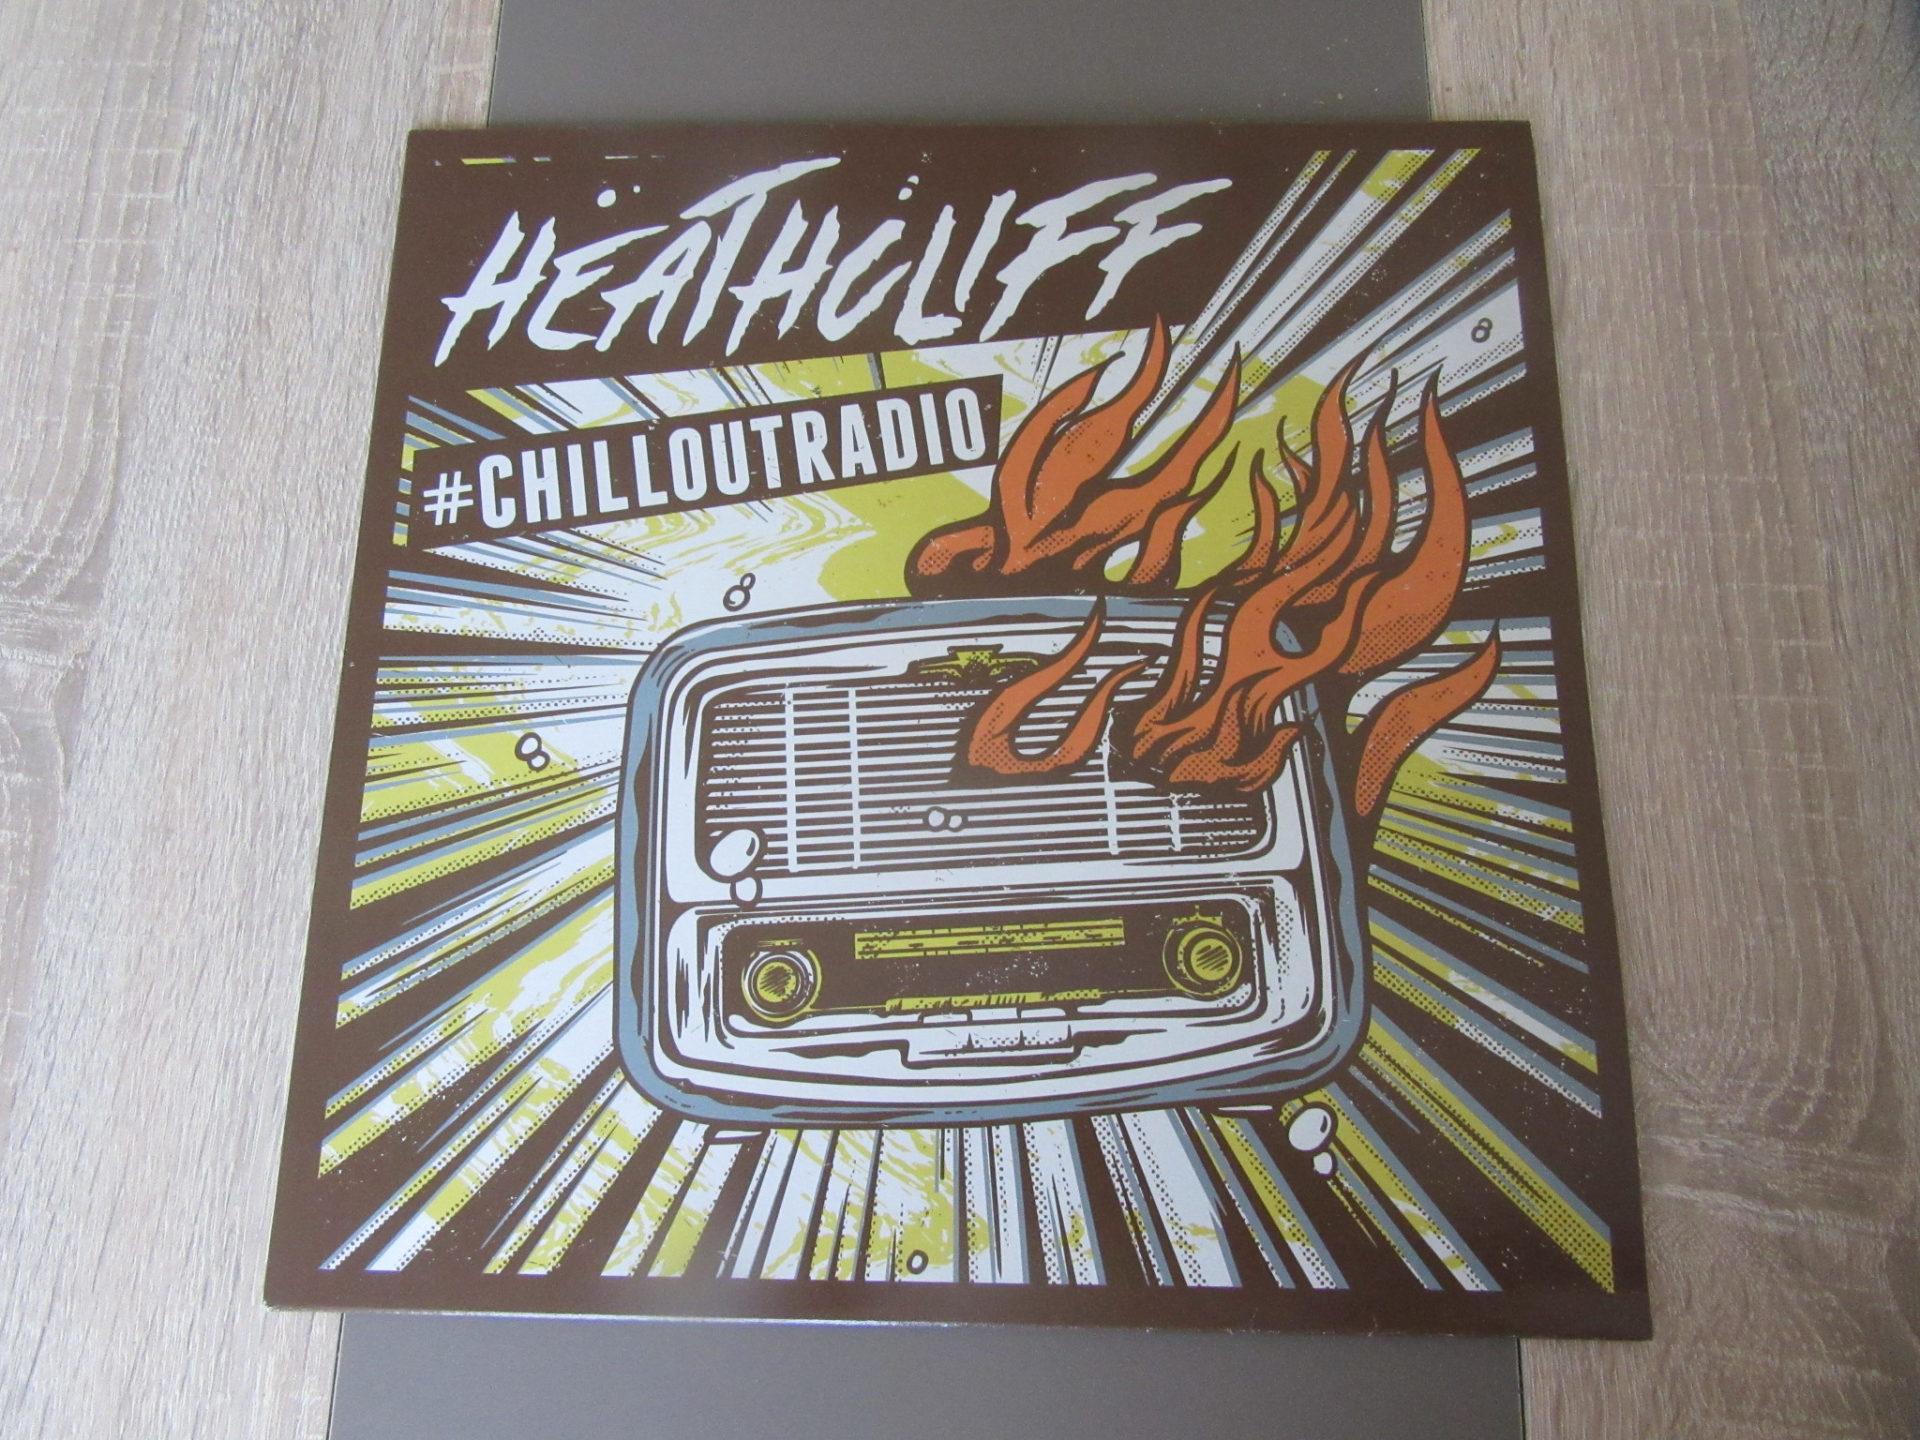 Heathcliff - "Chillout Radio" col. Vinyl-LP 4